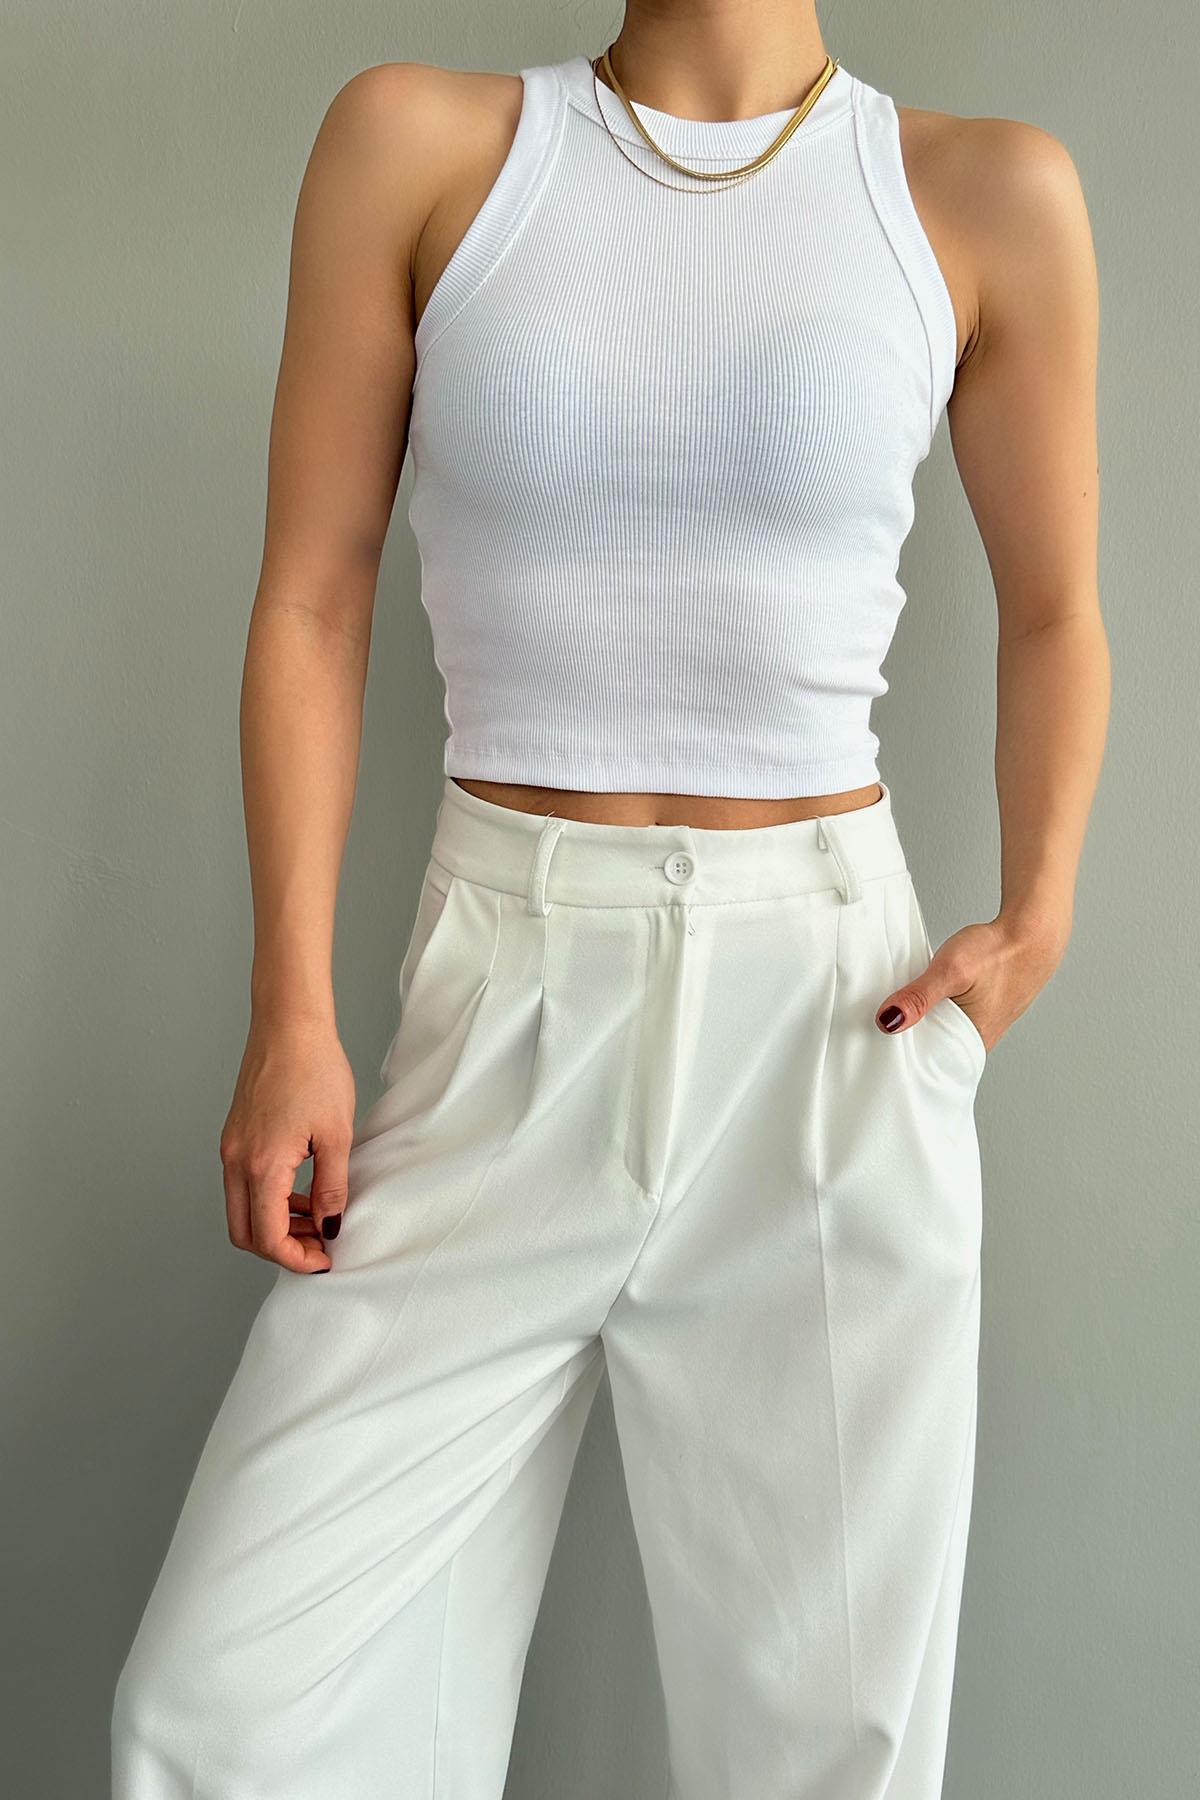 A wholesale clothing model wears Camisole Singlet - White, Turkish wholesale Undershirt of Qustyle